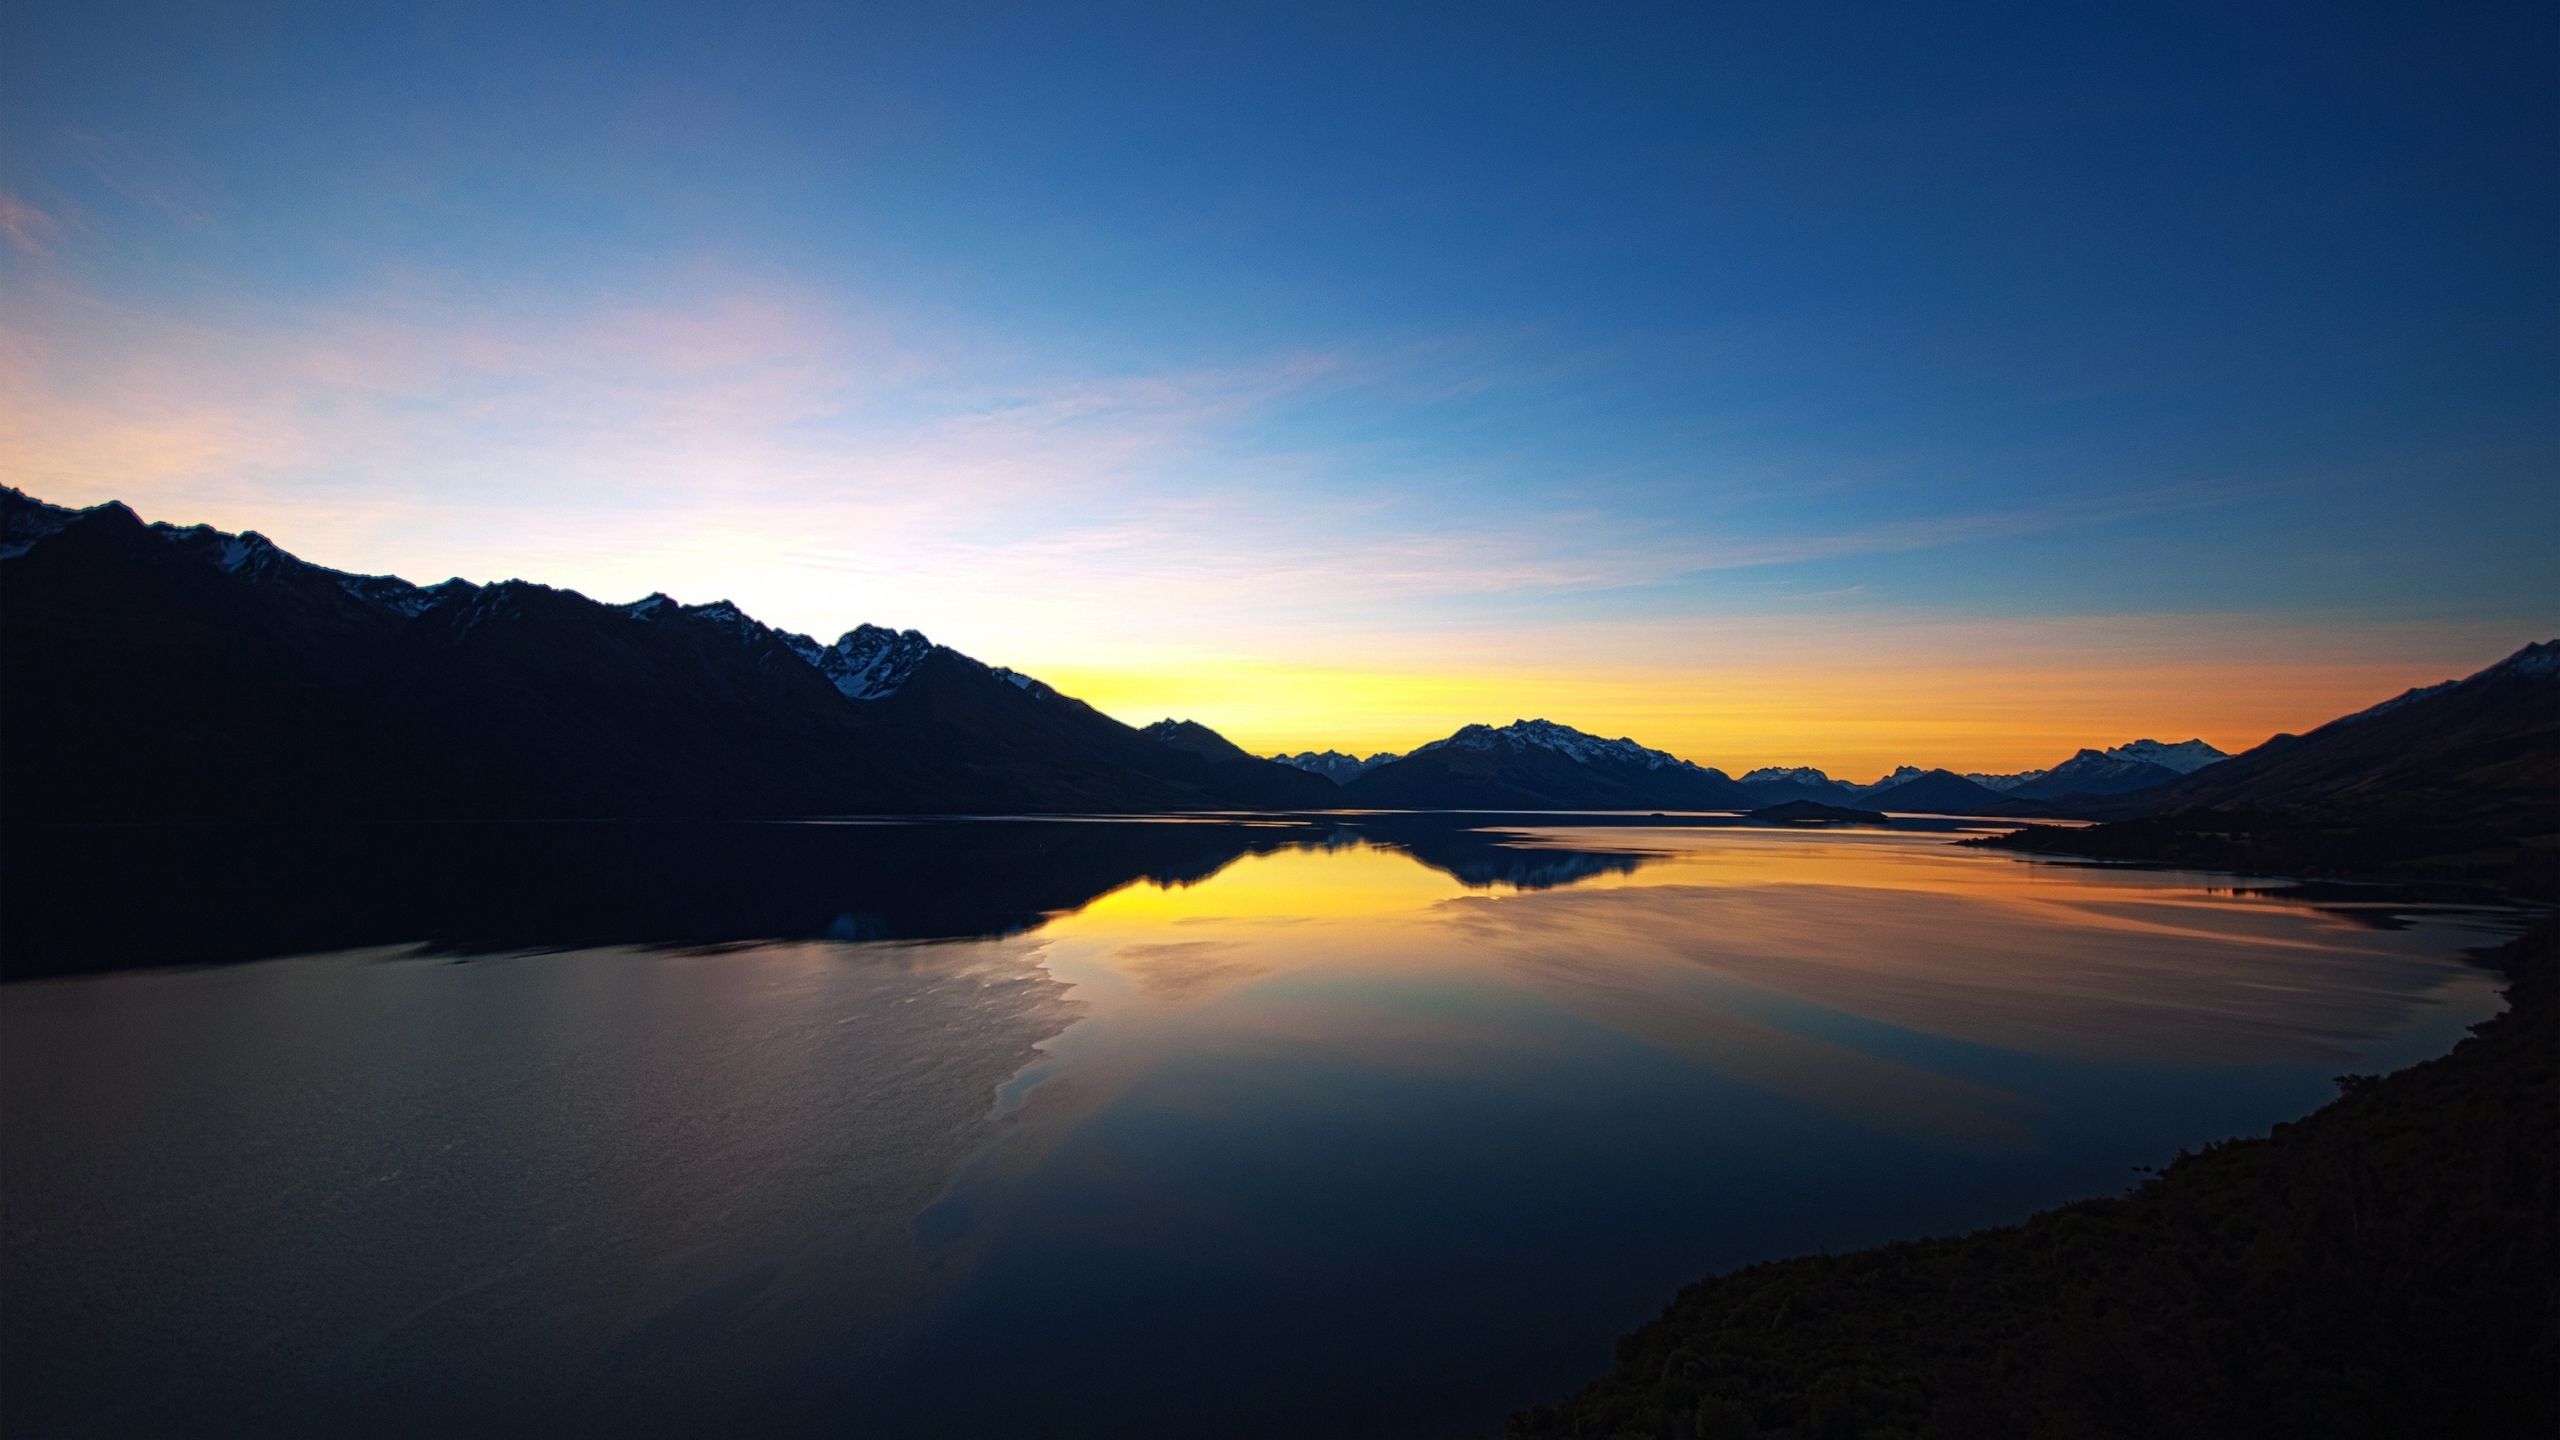 Sunset over mountain lake MacBook Air Wallpaper Download